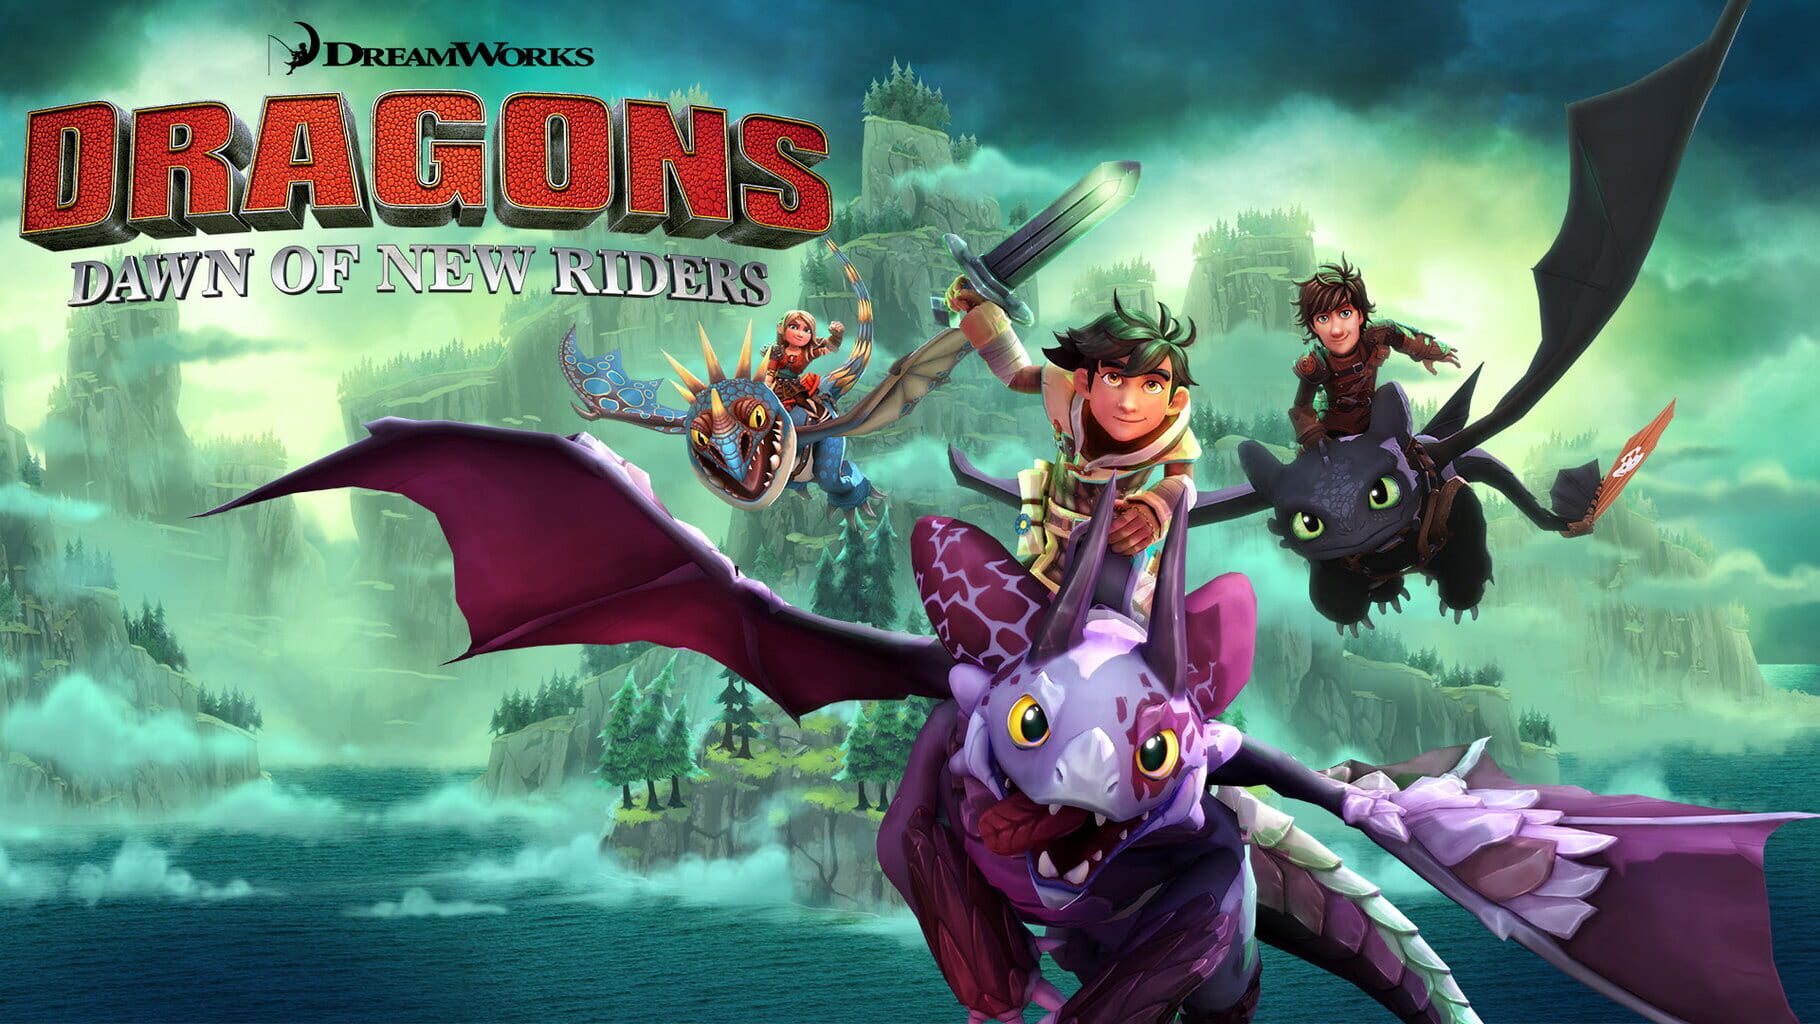 DreamWorks Dragons Dawn of New Riders artwork